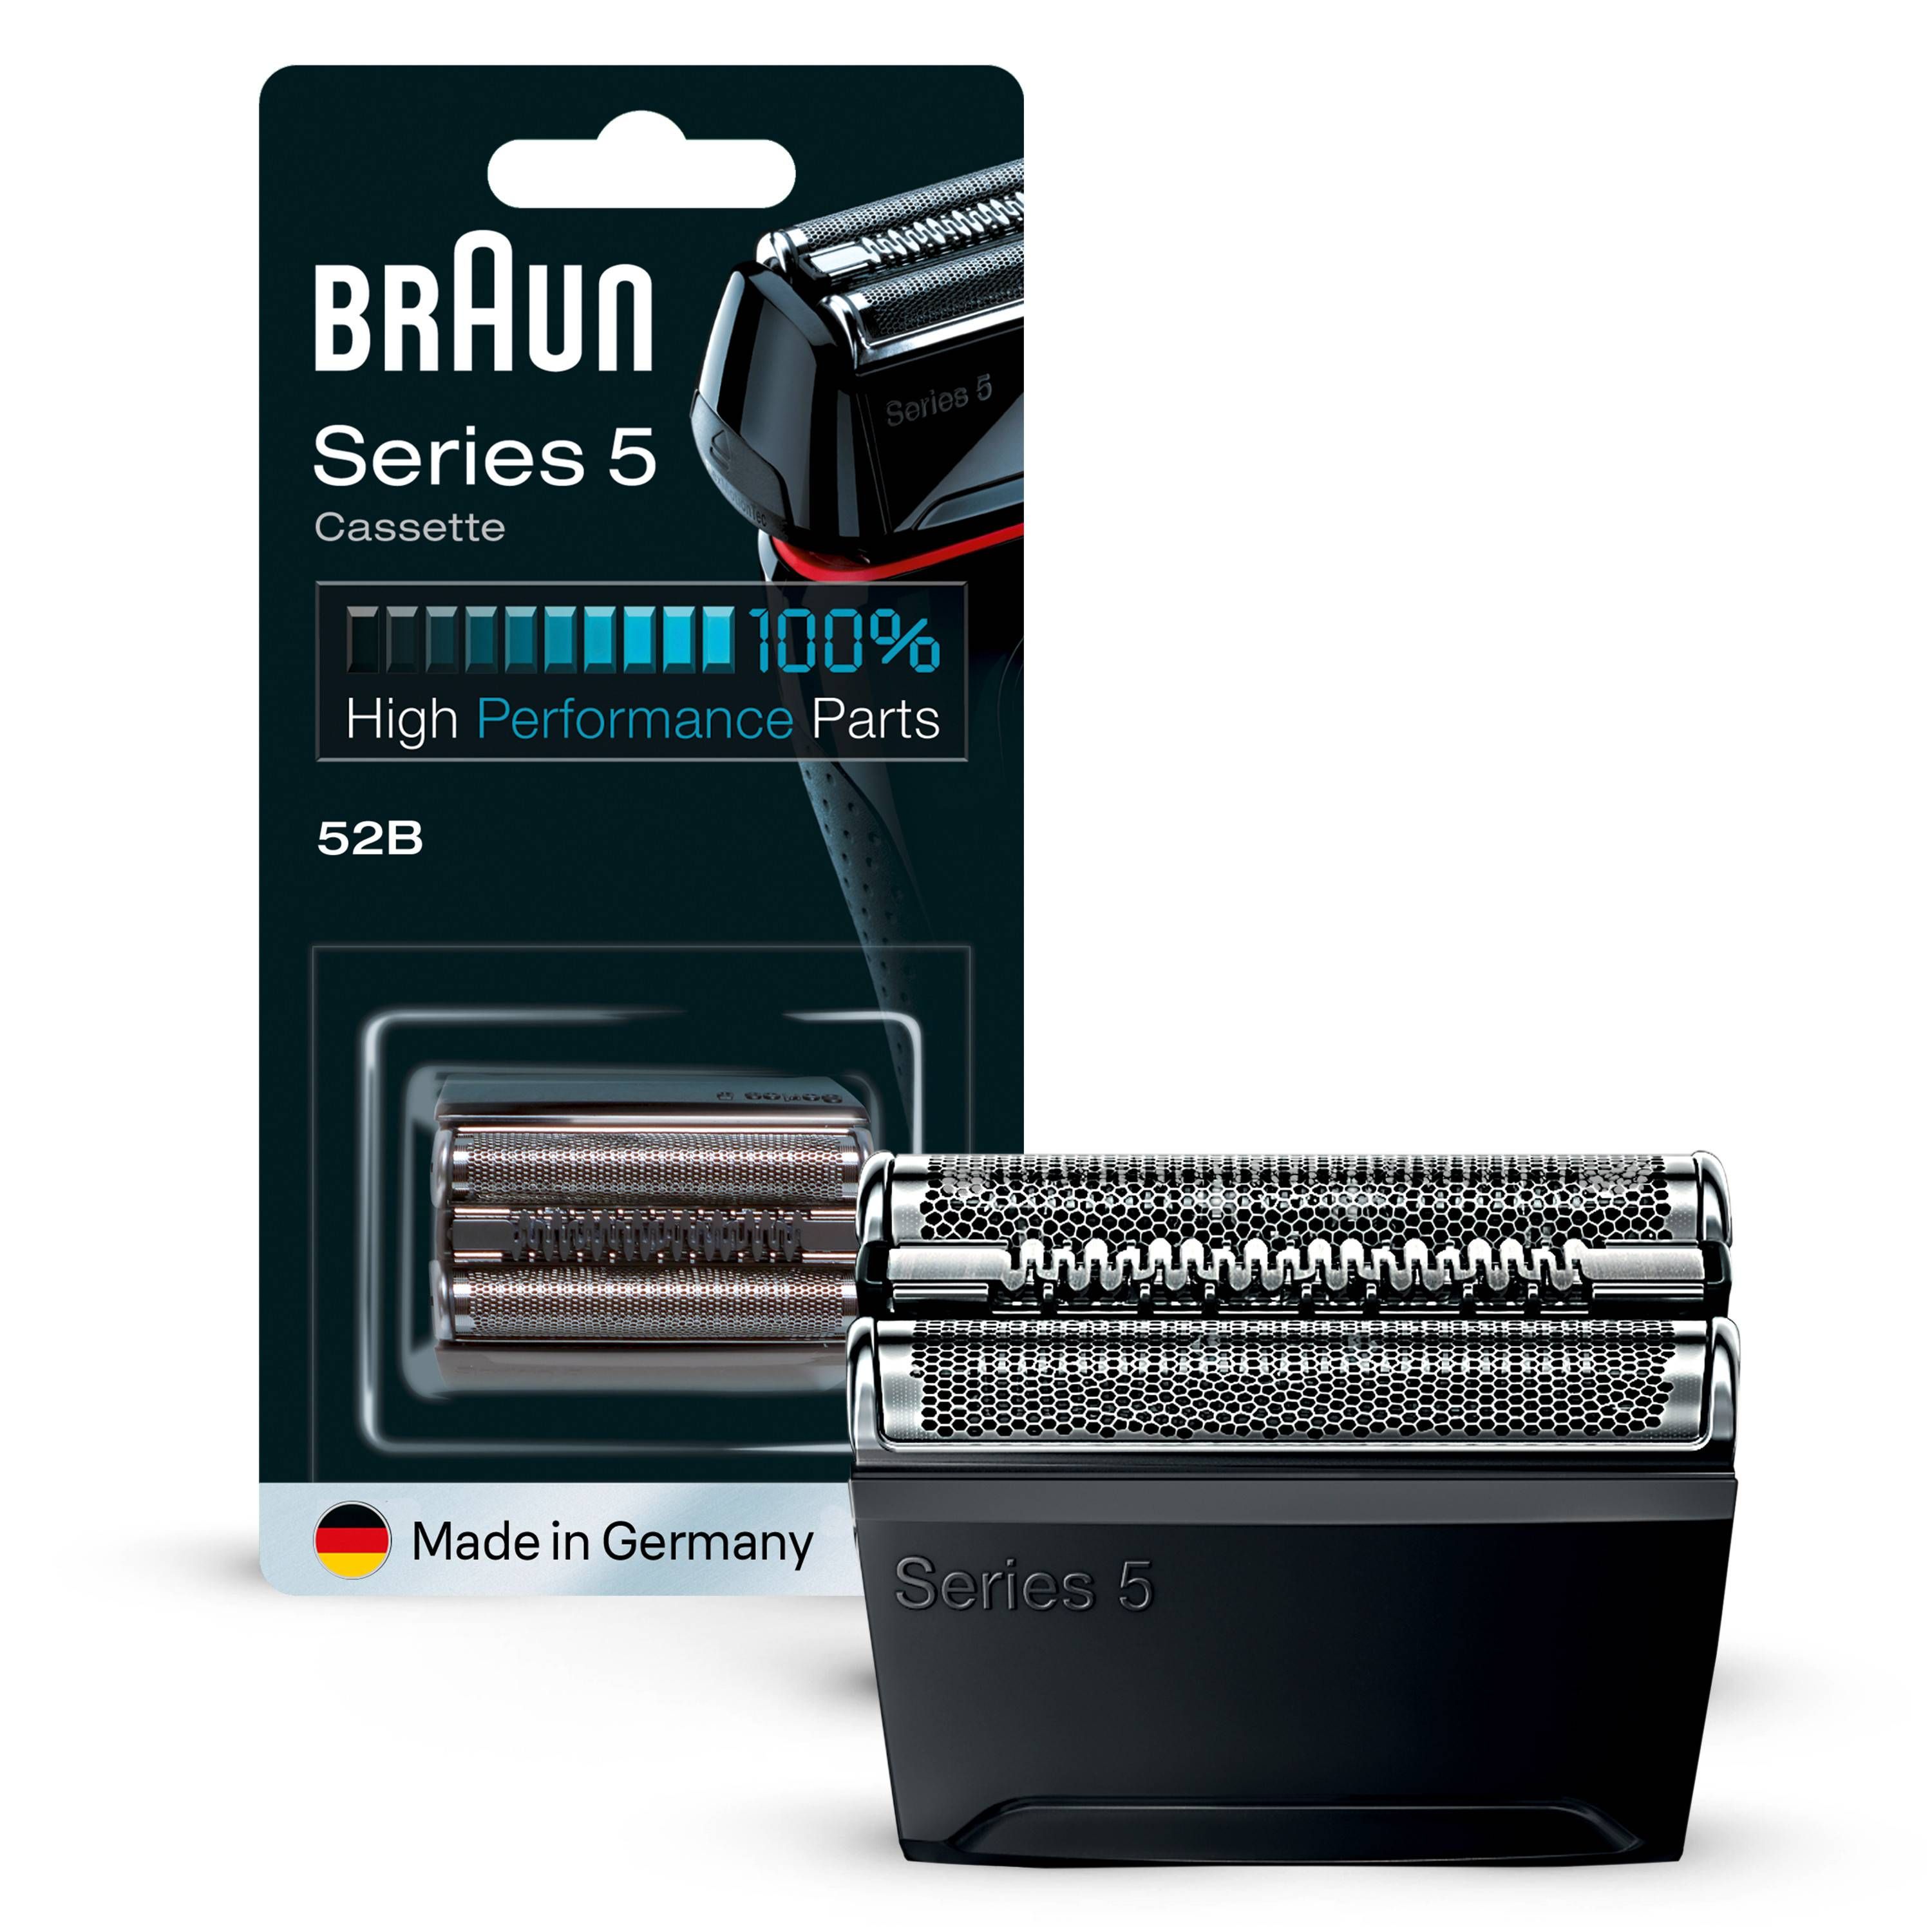 Braun Series 5 51-M4500cs ab 115,98 € im Preisvergleich!